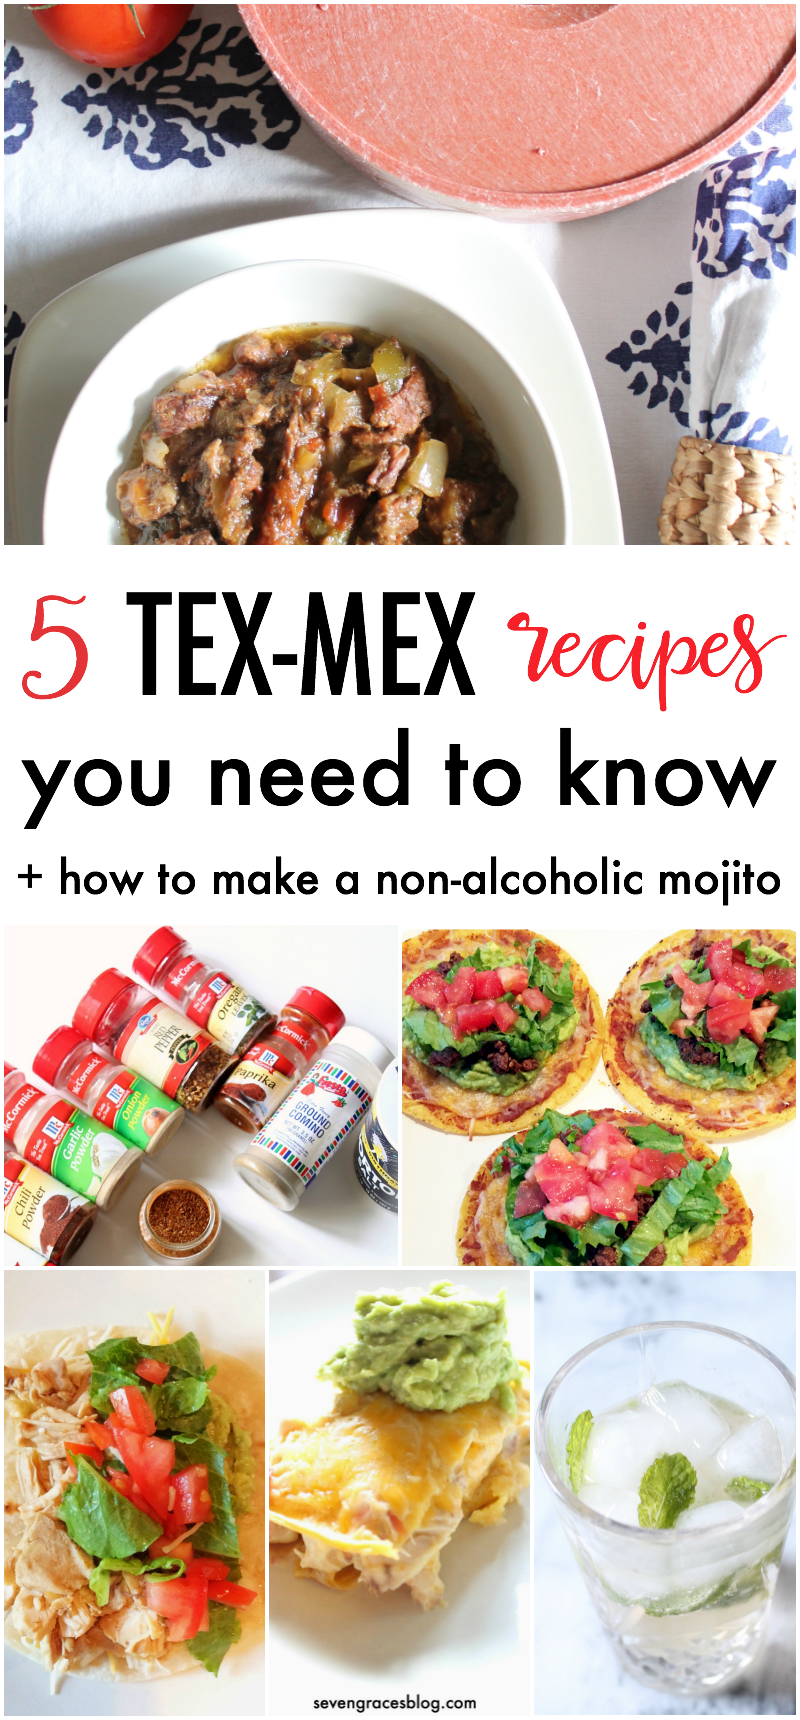 5 Best Tex-Mex Recipes + How to Make a Non-Alcoholic Mojito